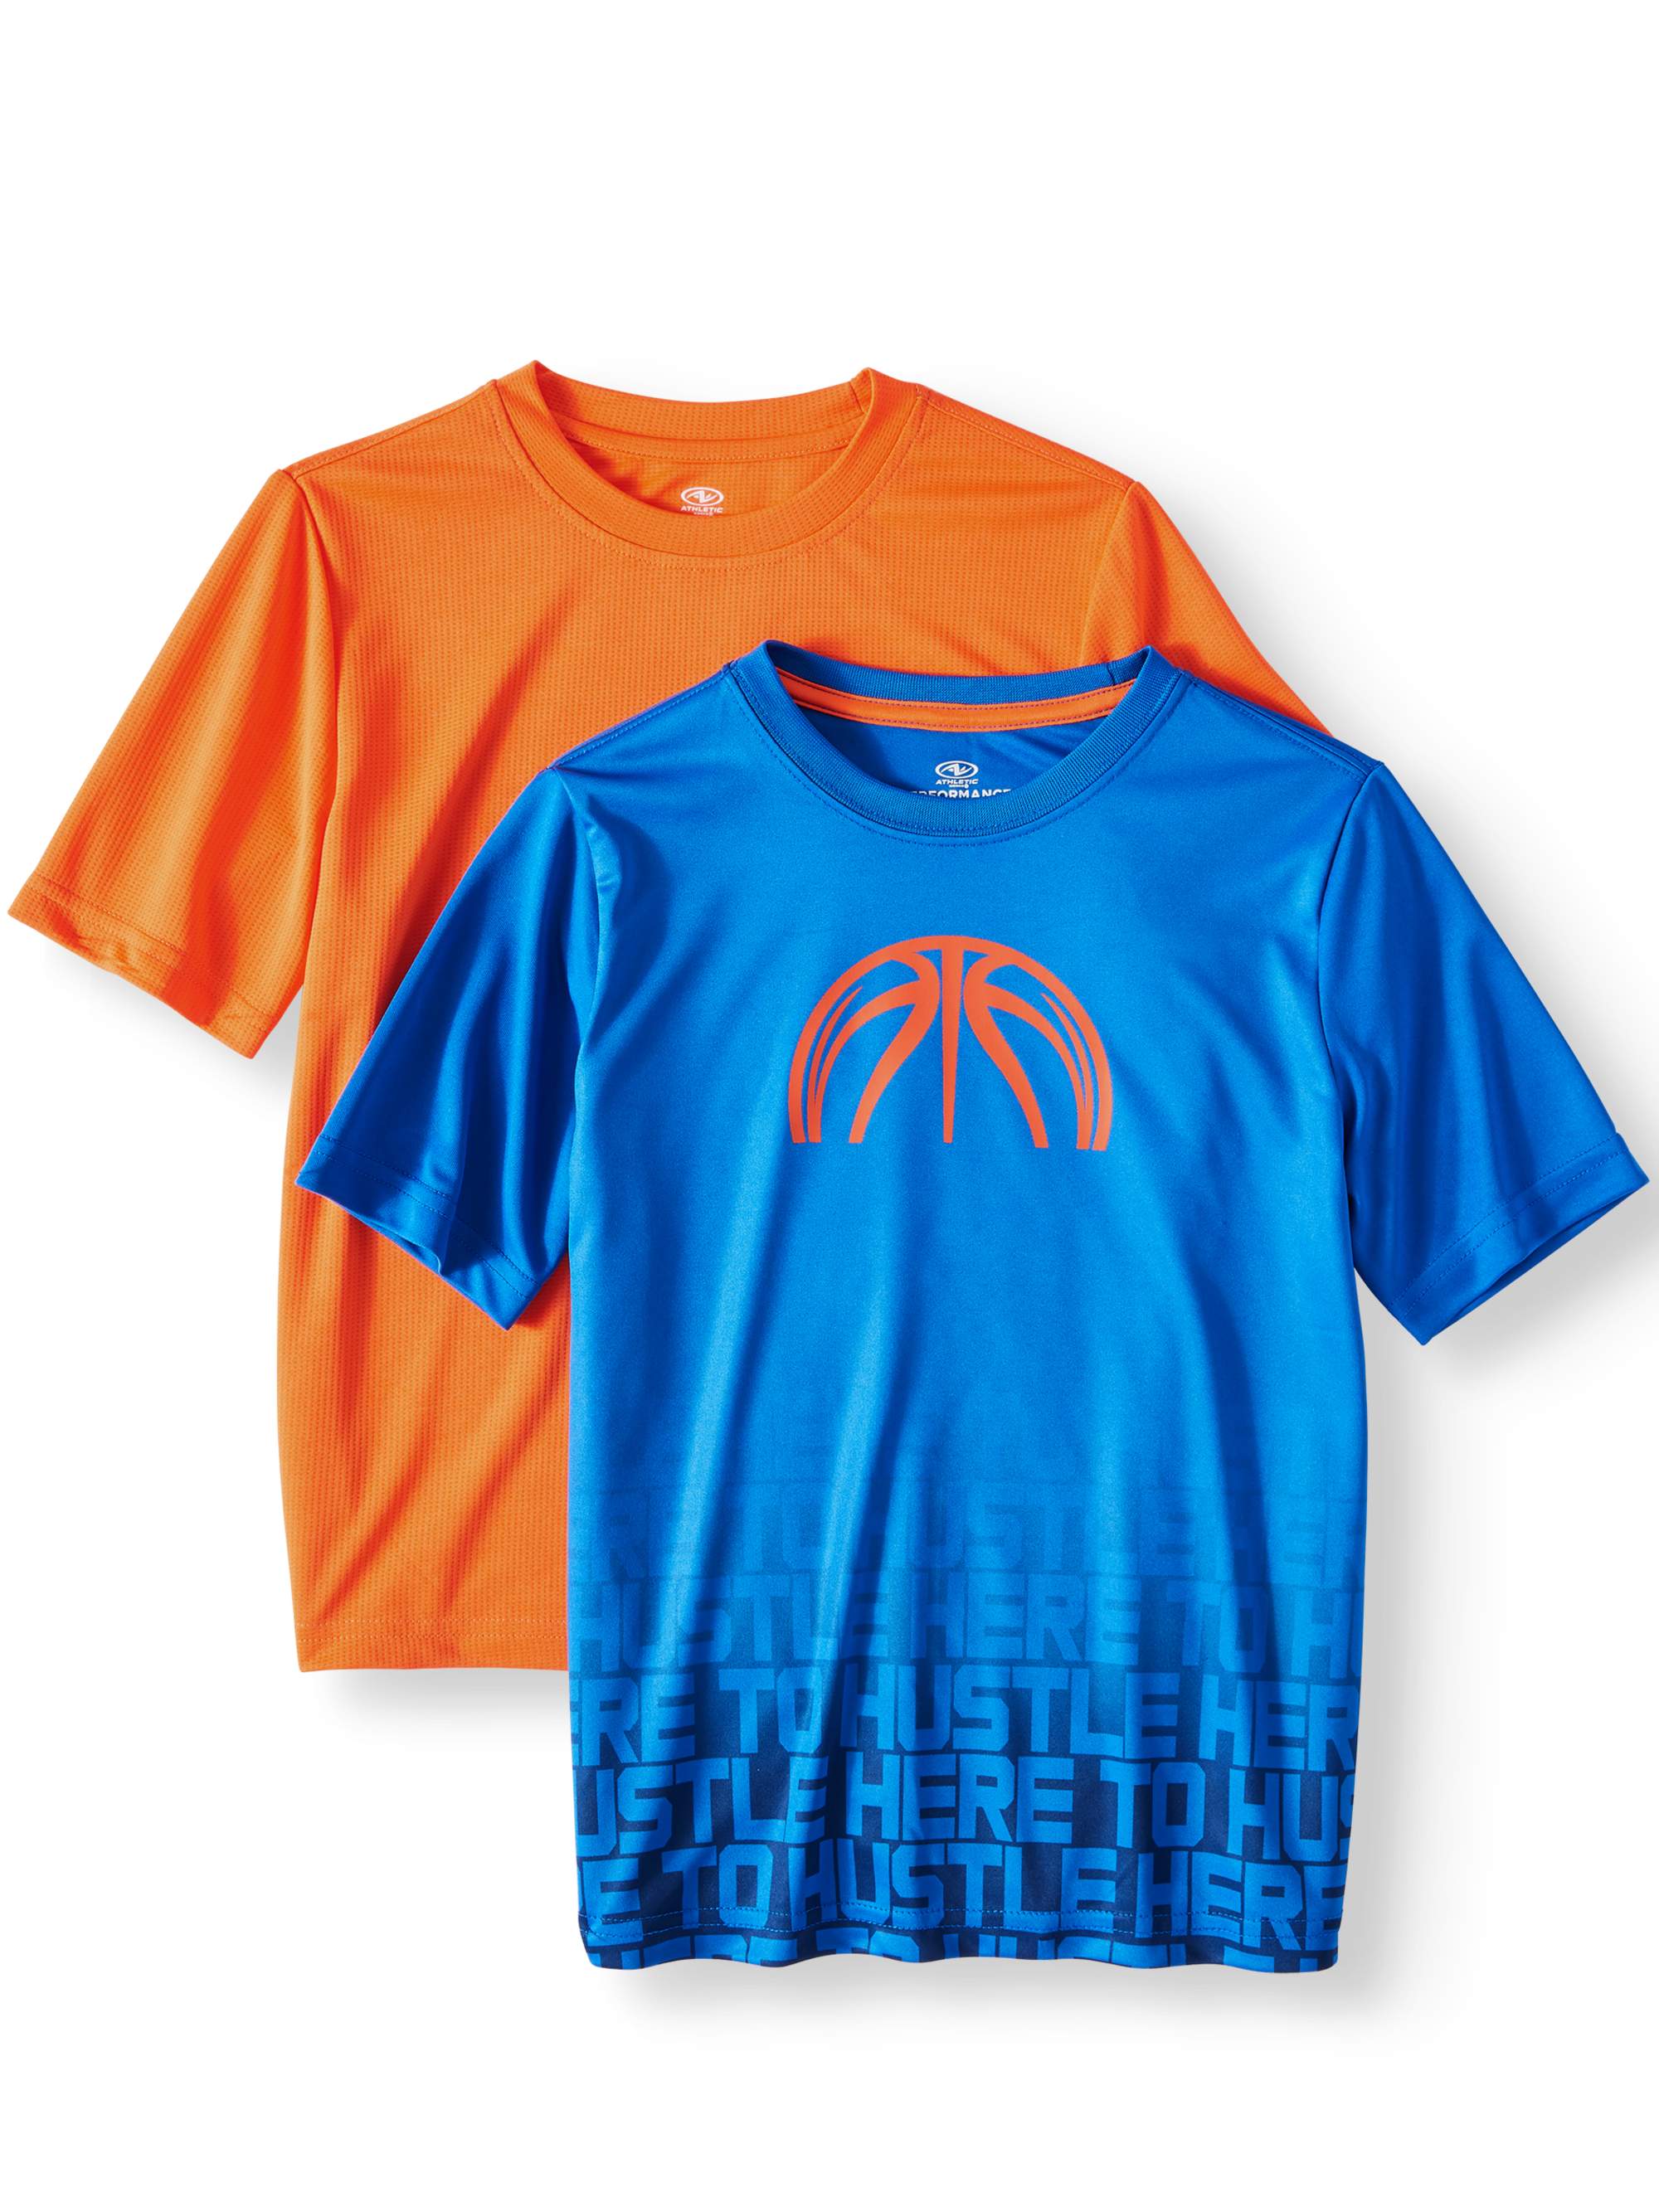 Athletic Works Short Sleeve Graphic & Solid T-Shirt, 2-Pack Set Value Bundle (Little Boys & Big Boys) - image 1 of 3